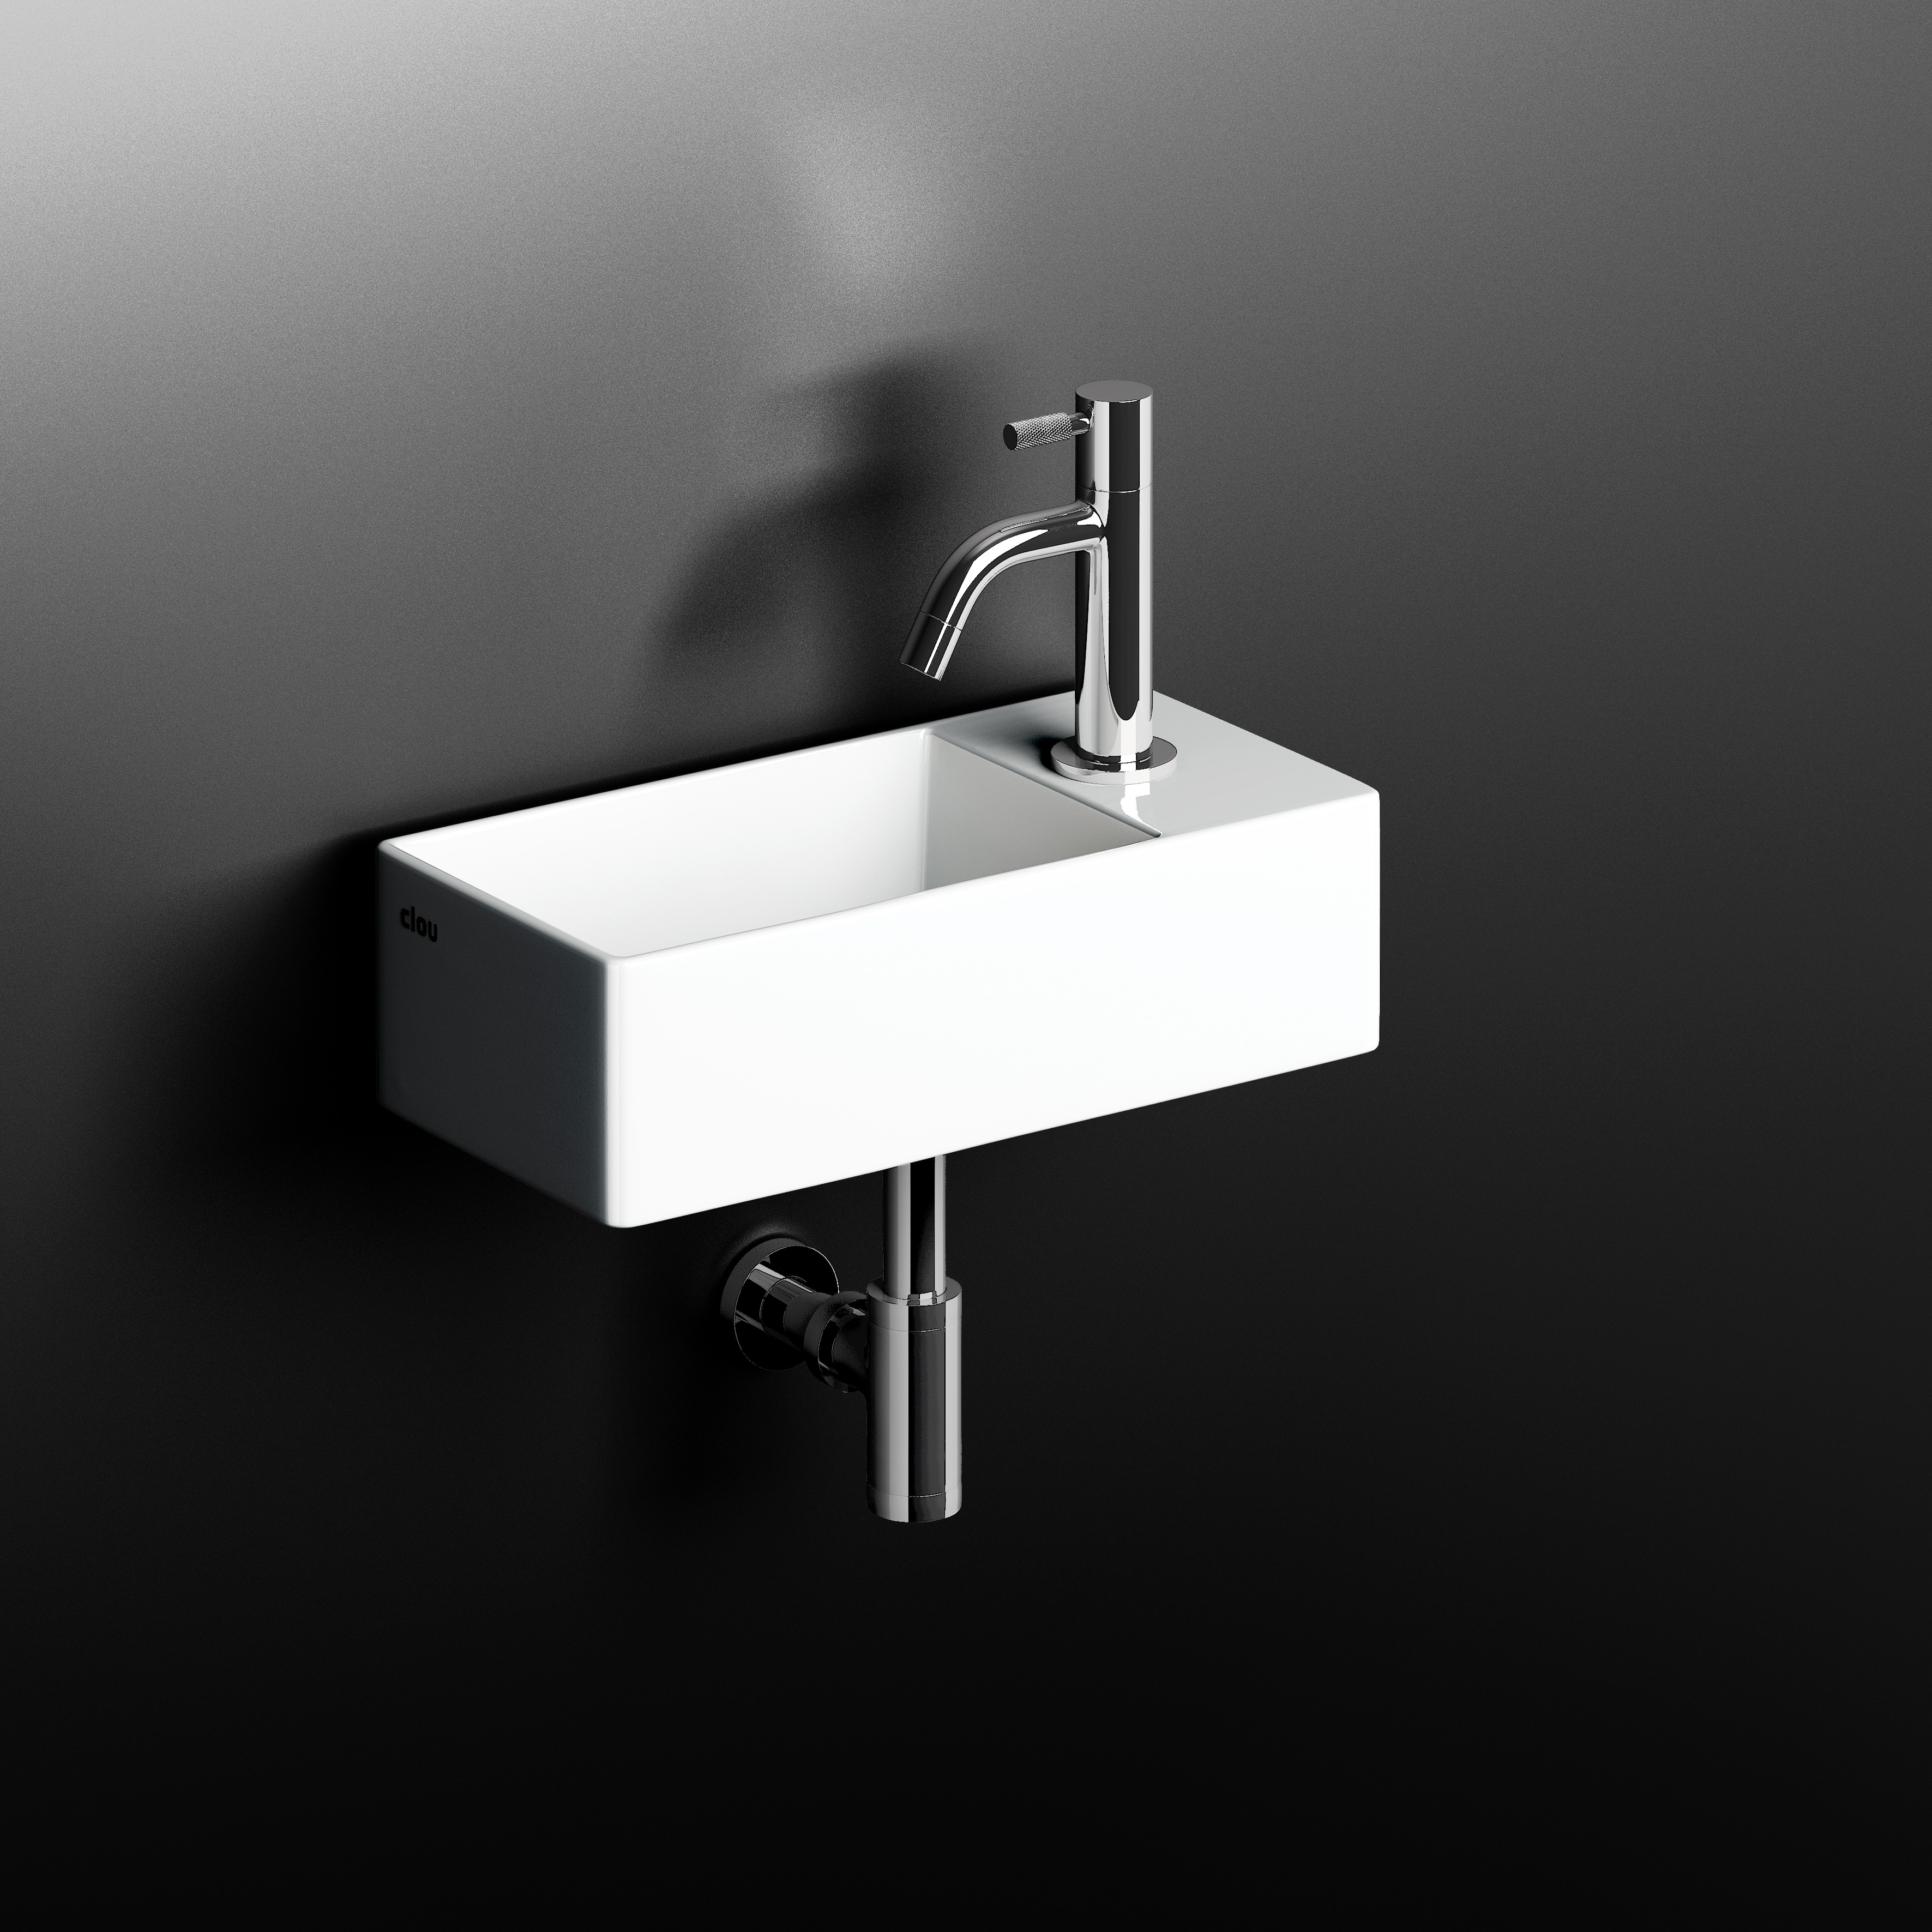 Visser Encommium manager New Flush - Clou bath findings - Sanitair voor design badkamers